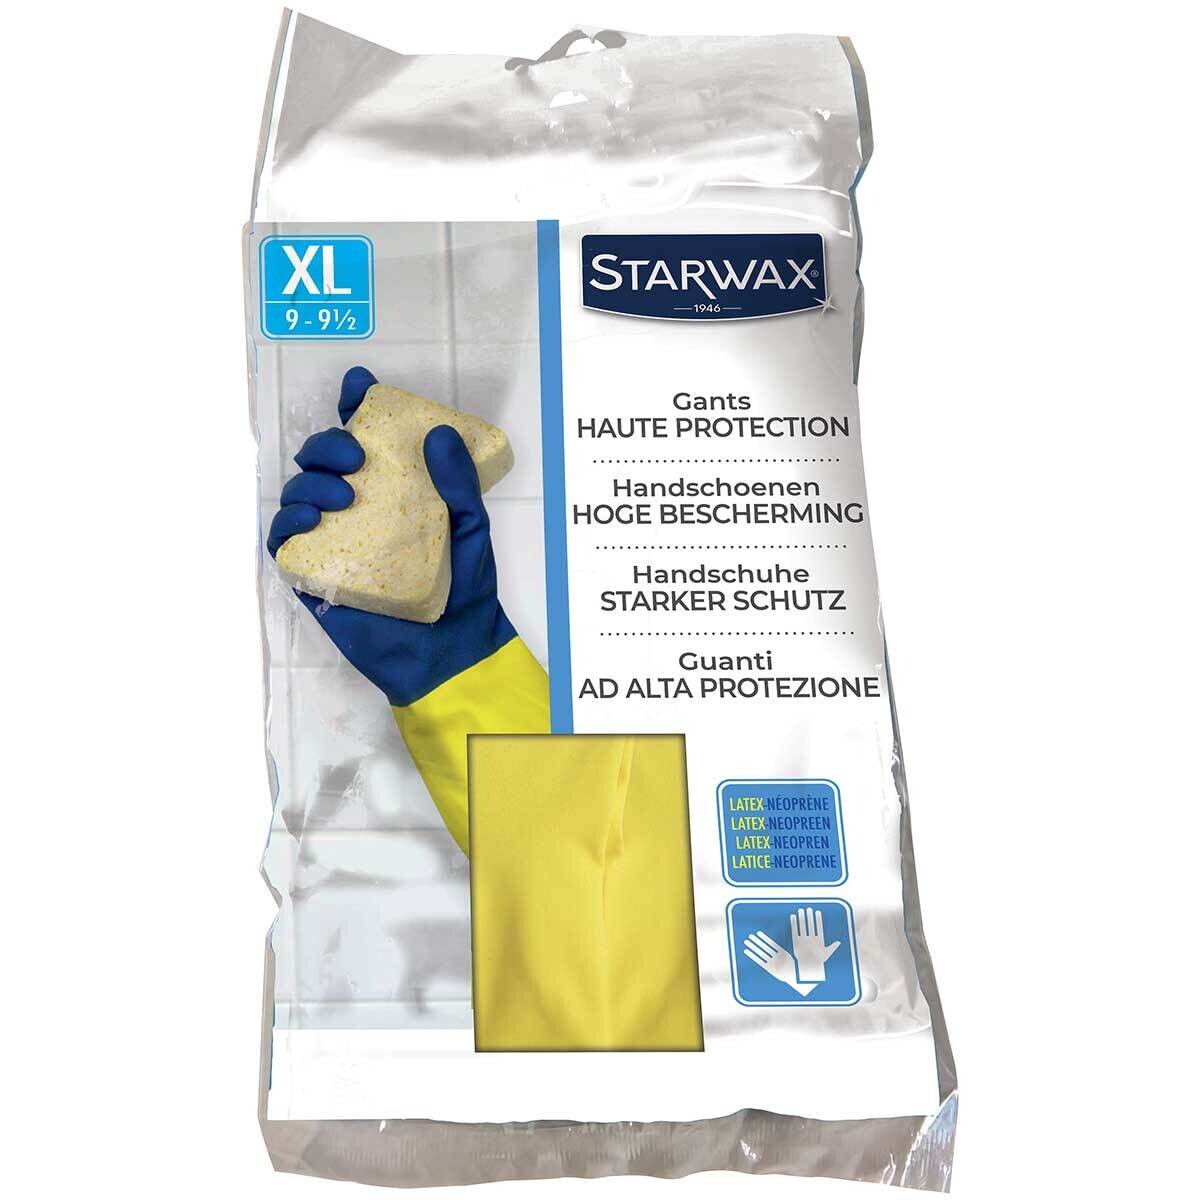 Starwax gants de ménage haute protection 'xl